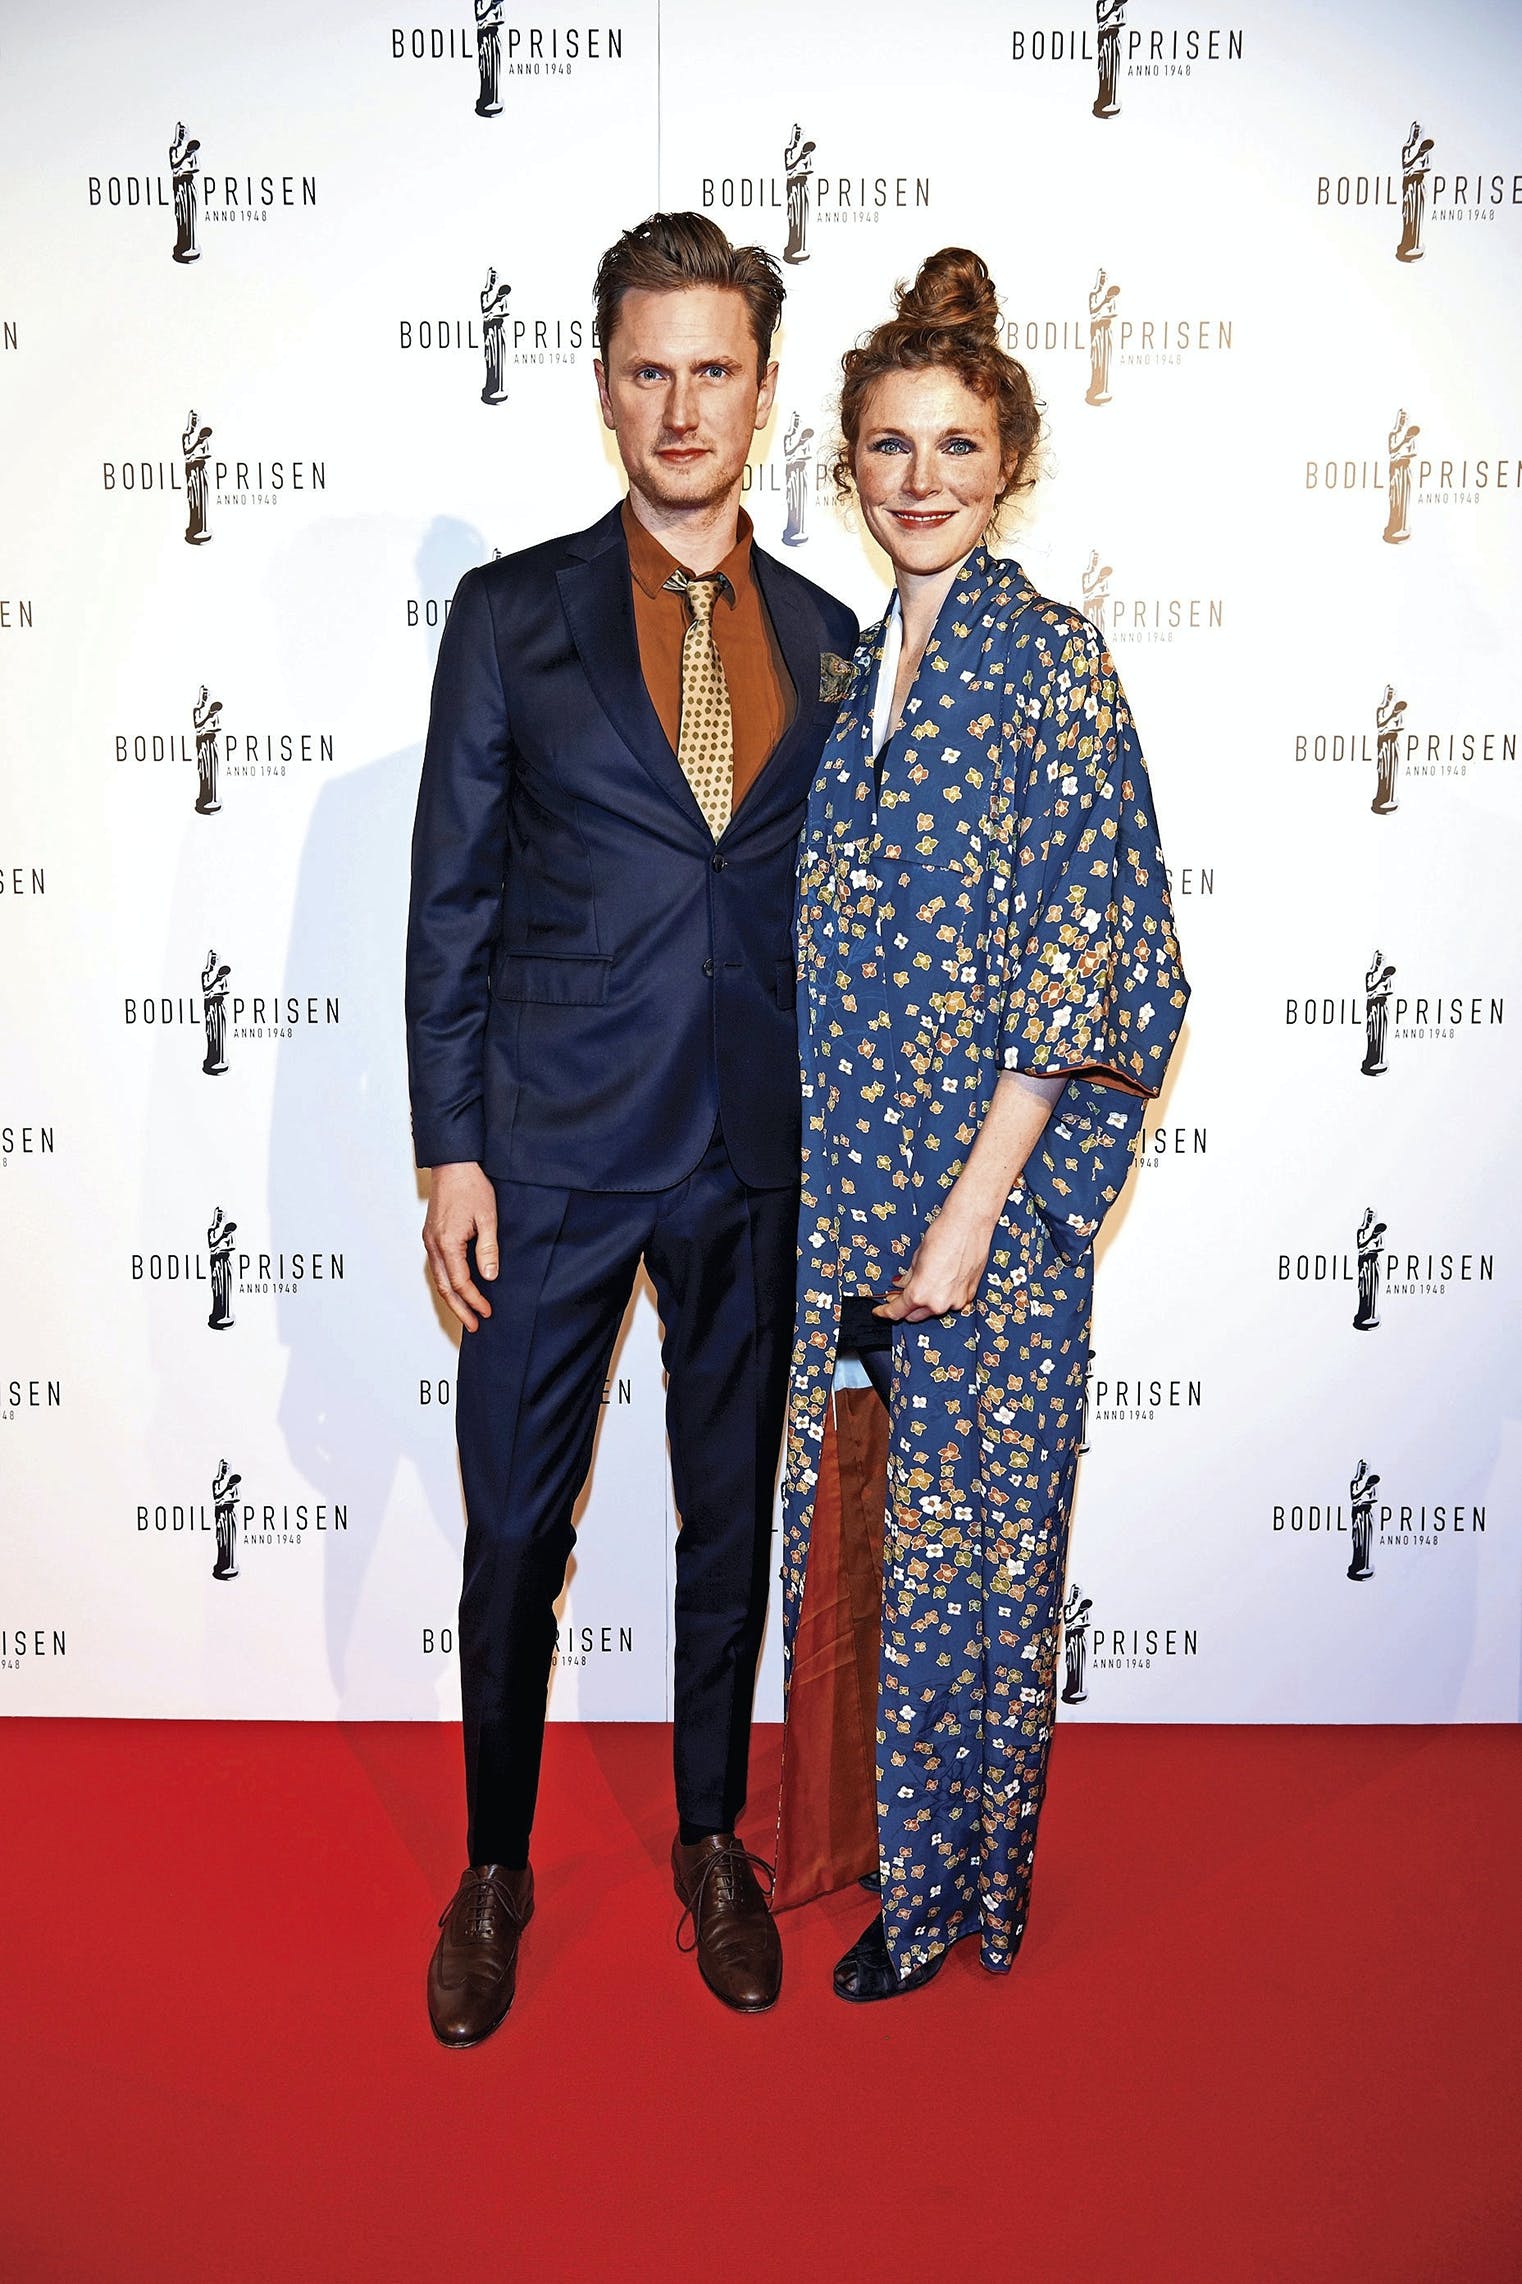 Mikkel Folsgaard with wife Freja Friis at Bodil Awards